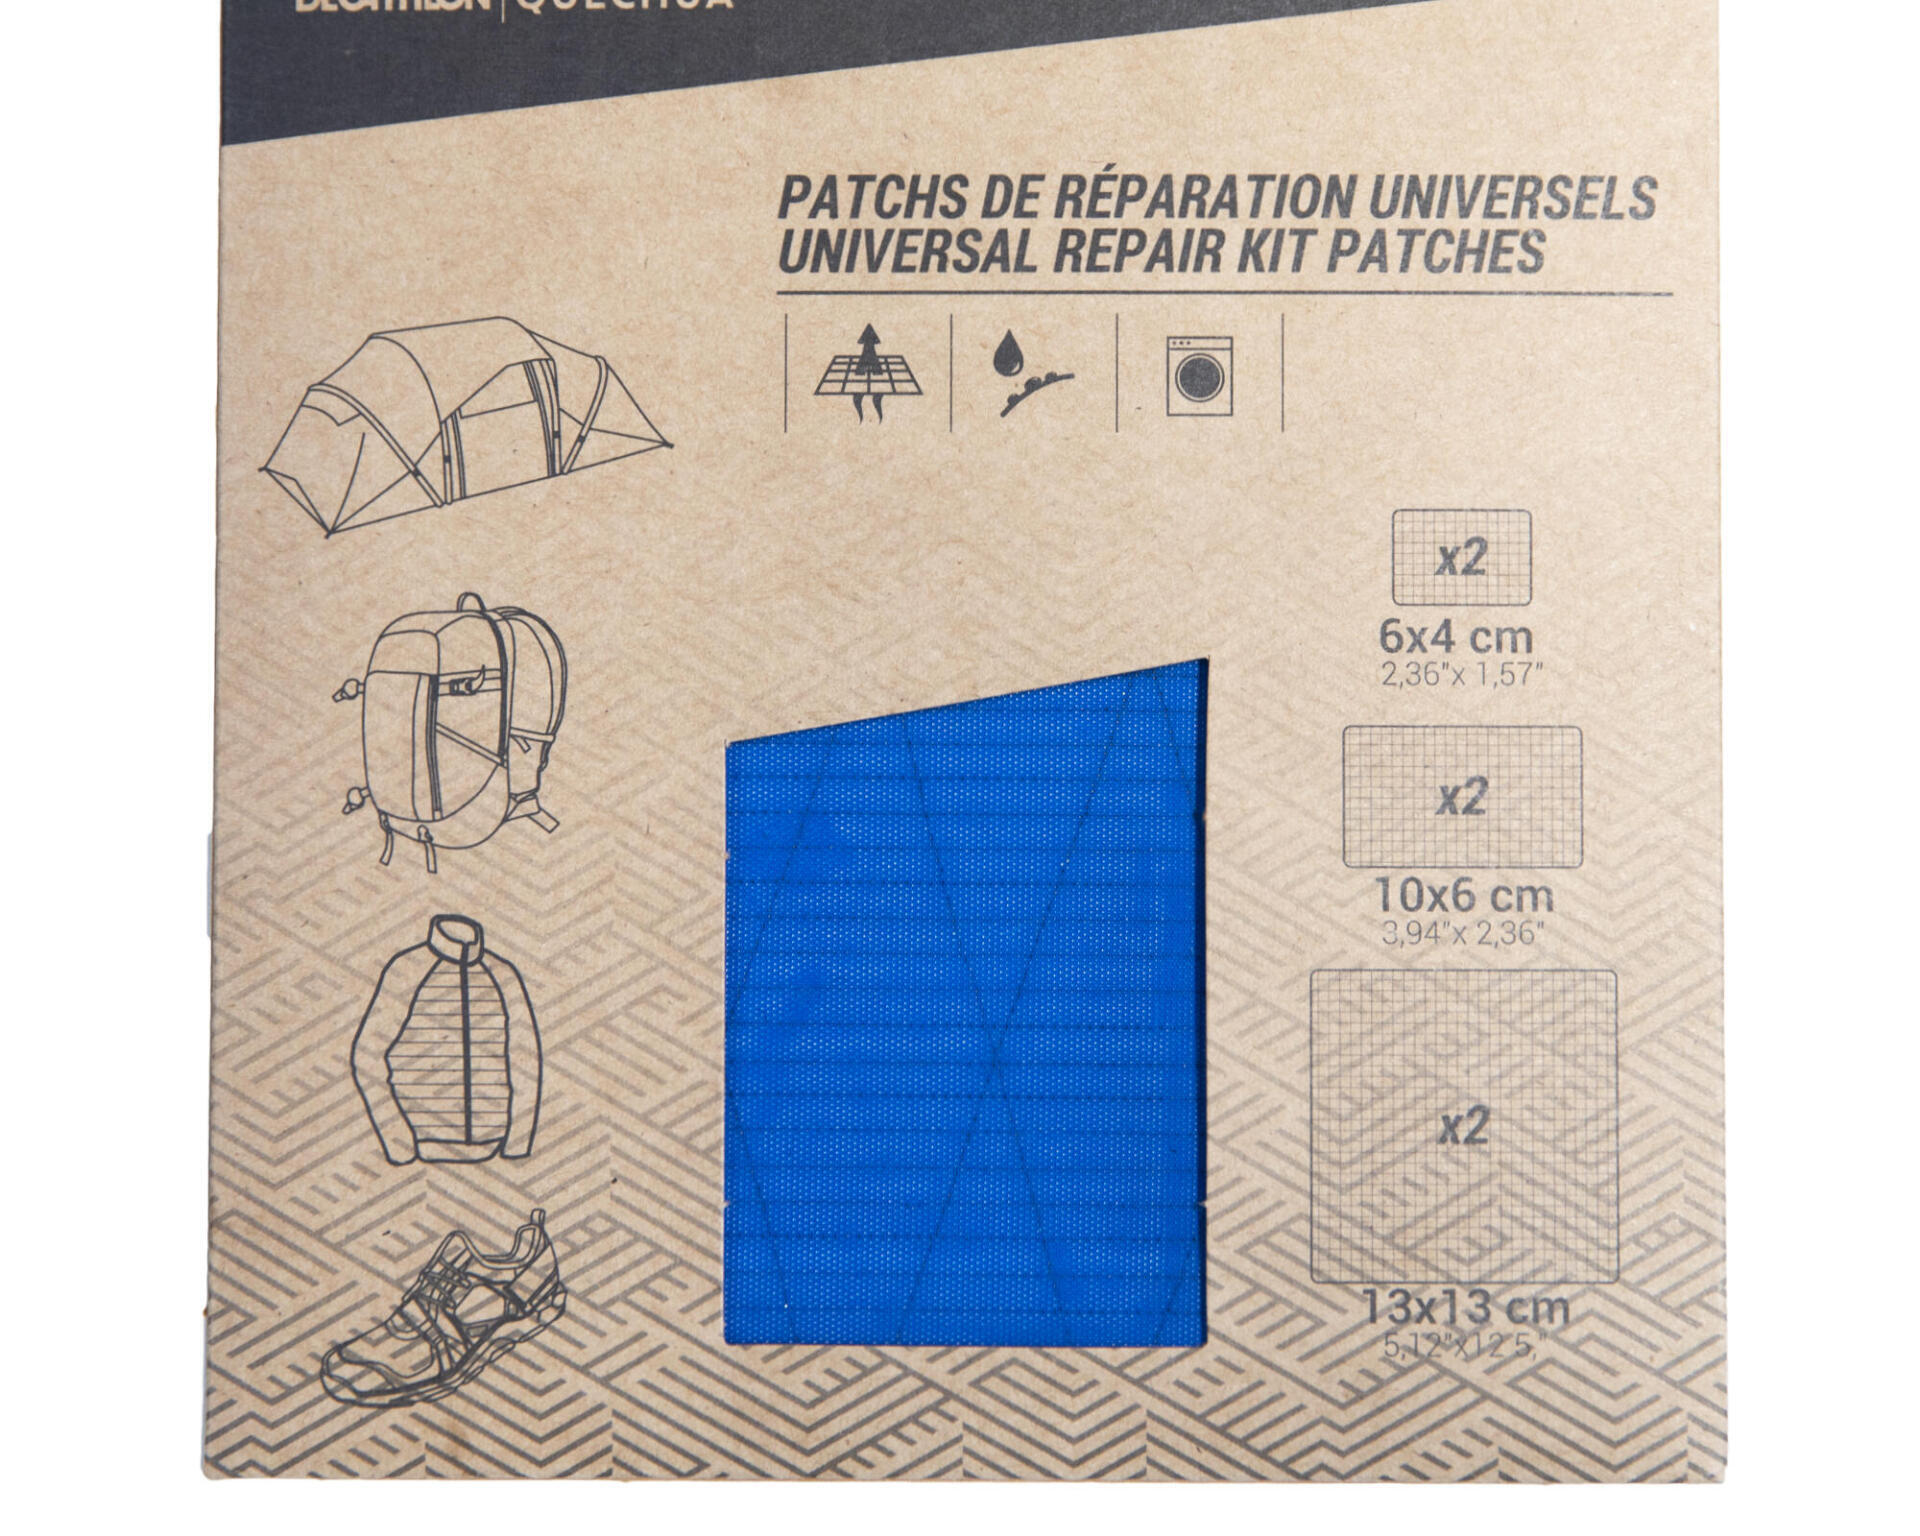 Universal repair kit patches